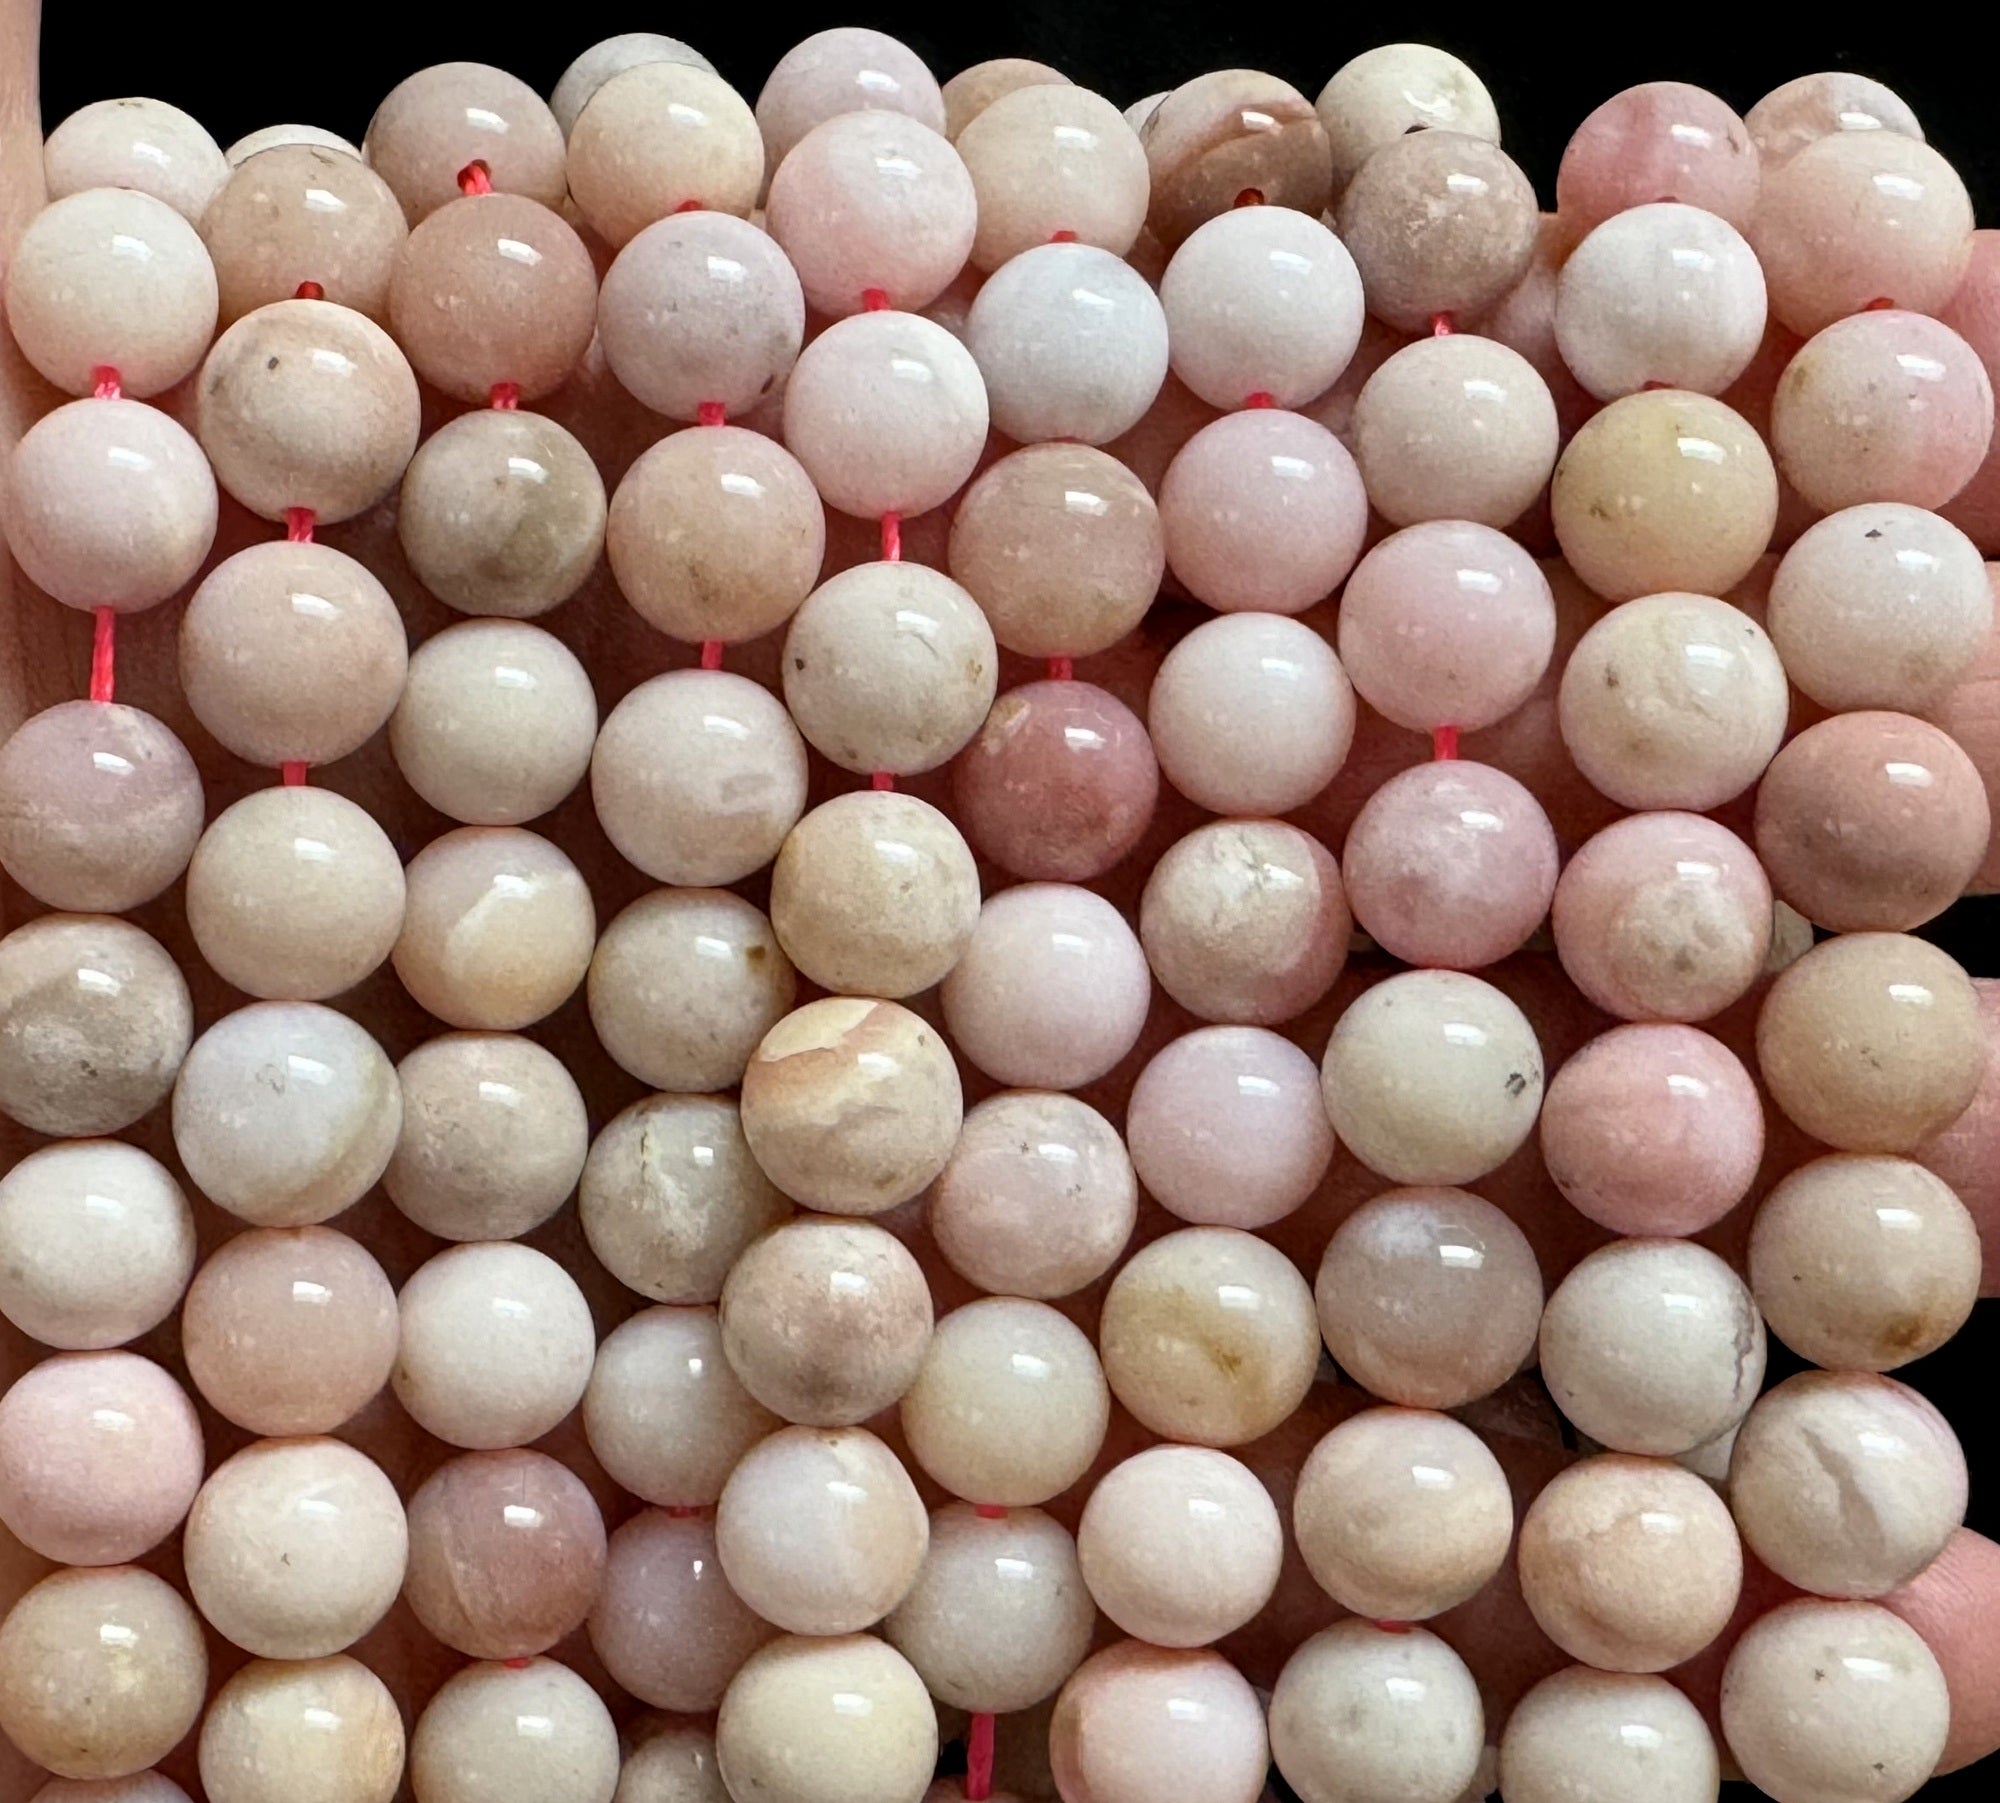 Peruvian Pink Opal 10mm round natural gemstone beads 15.5" strand - Oz Beads 